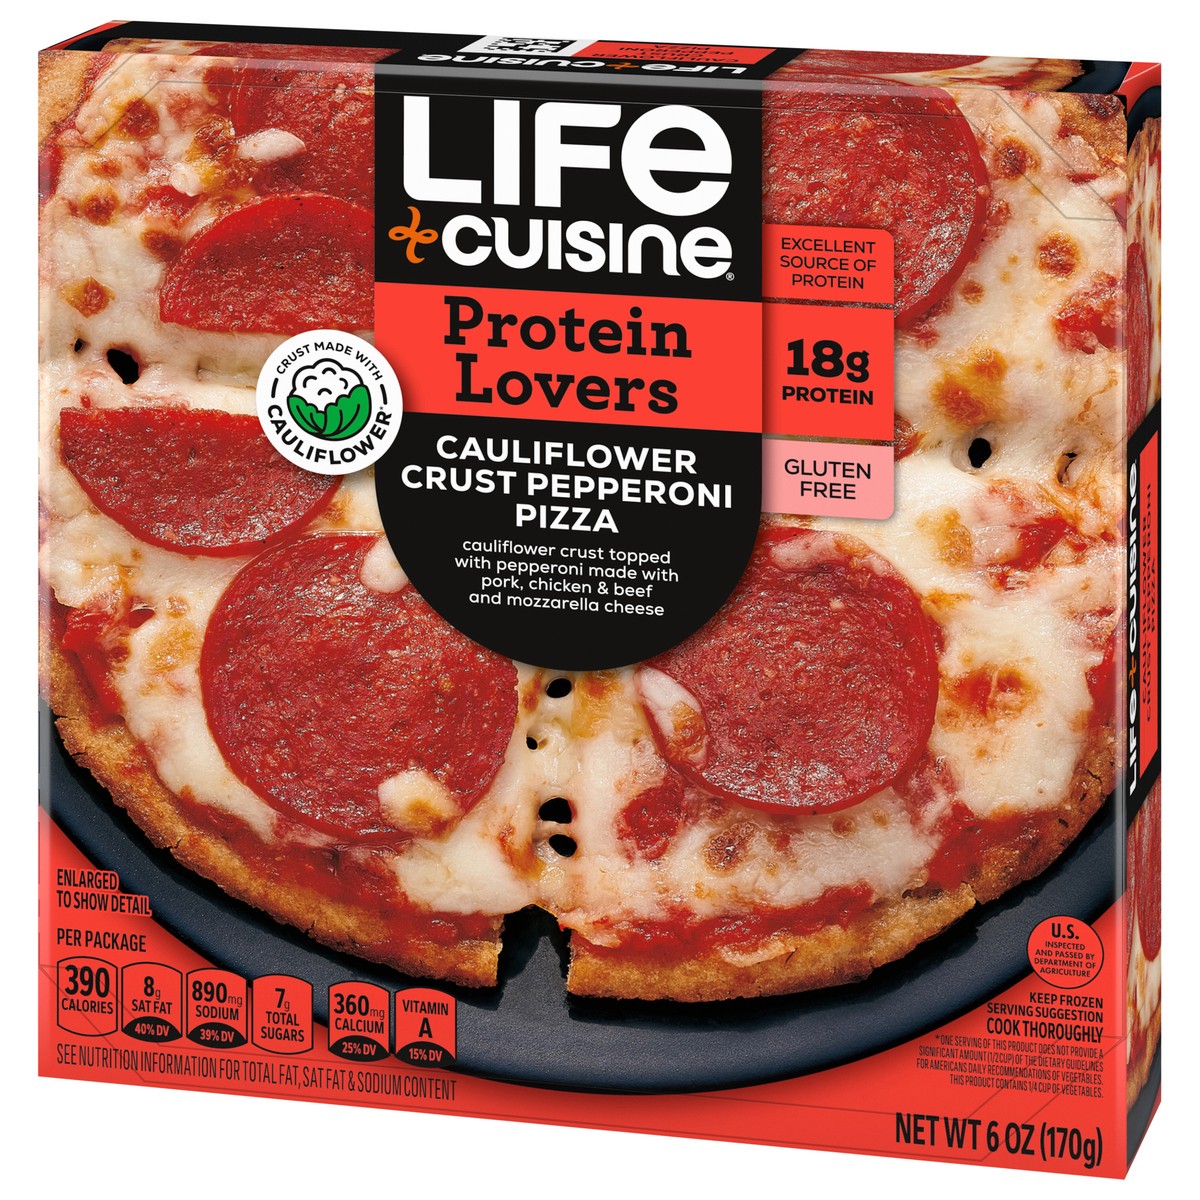 slide 3 of 9, Life Cuisine Frozen Pizza Pepperoni Cauliflower Crust Pizza, High Protein Gluten Free Frozen Pizza Dinner, 6 oz